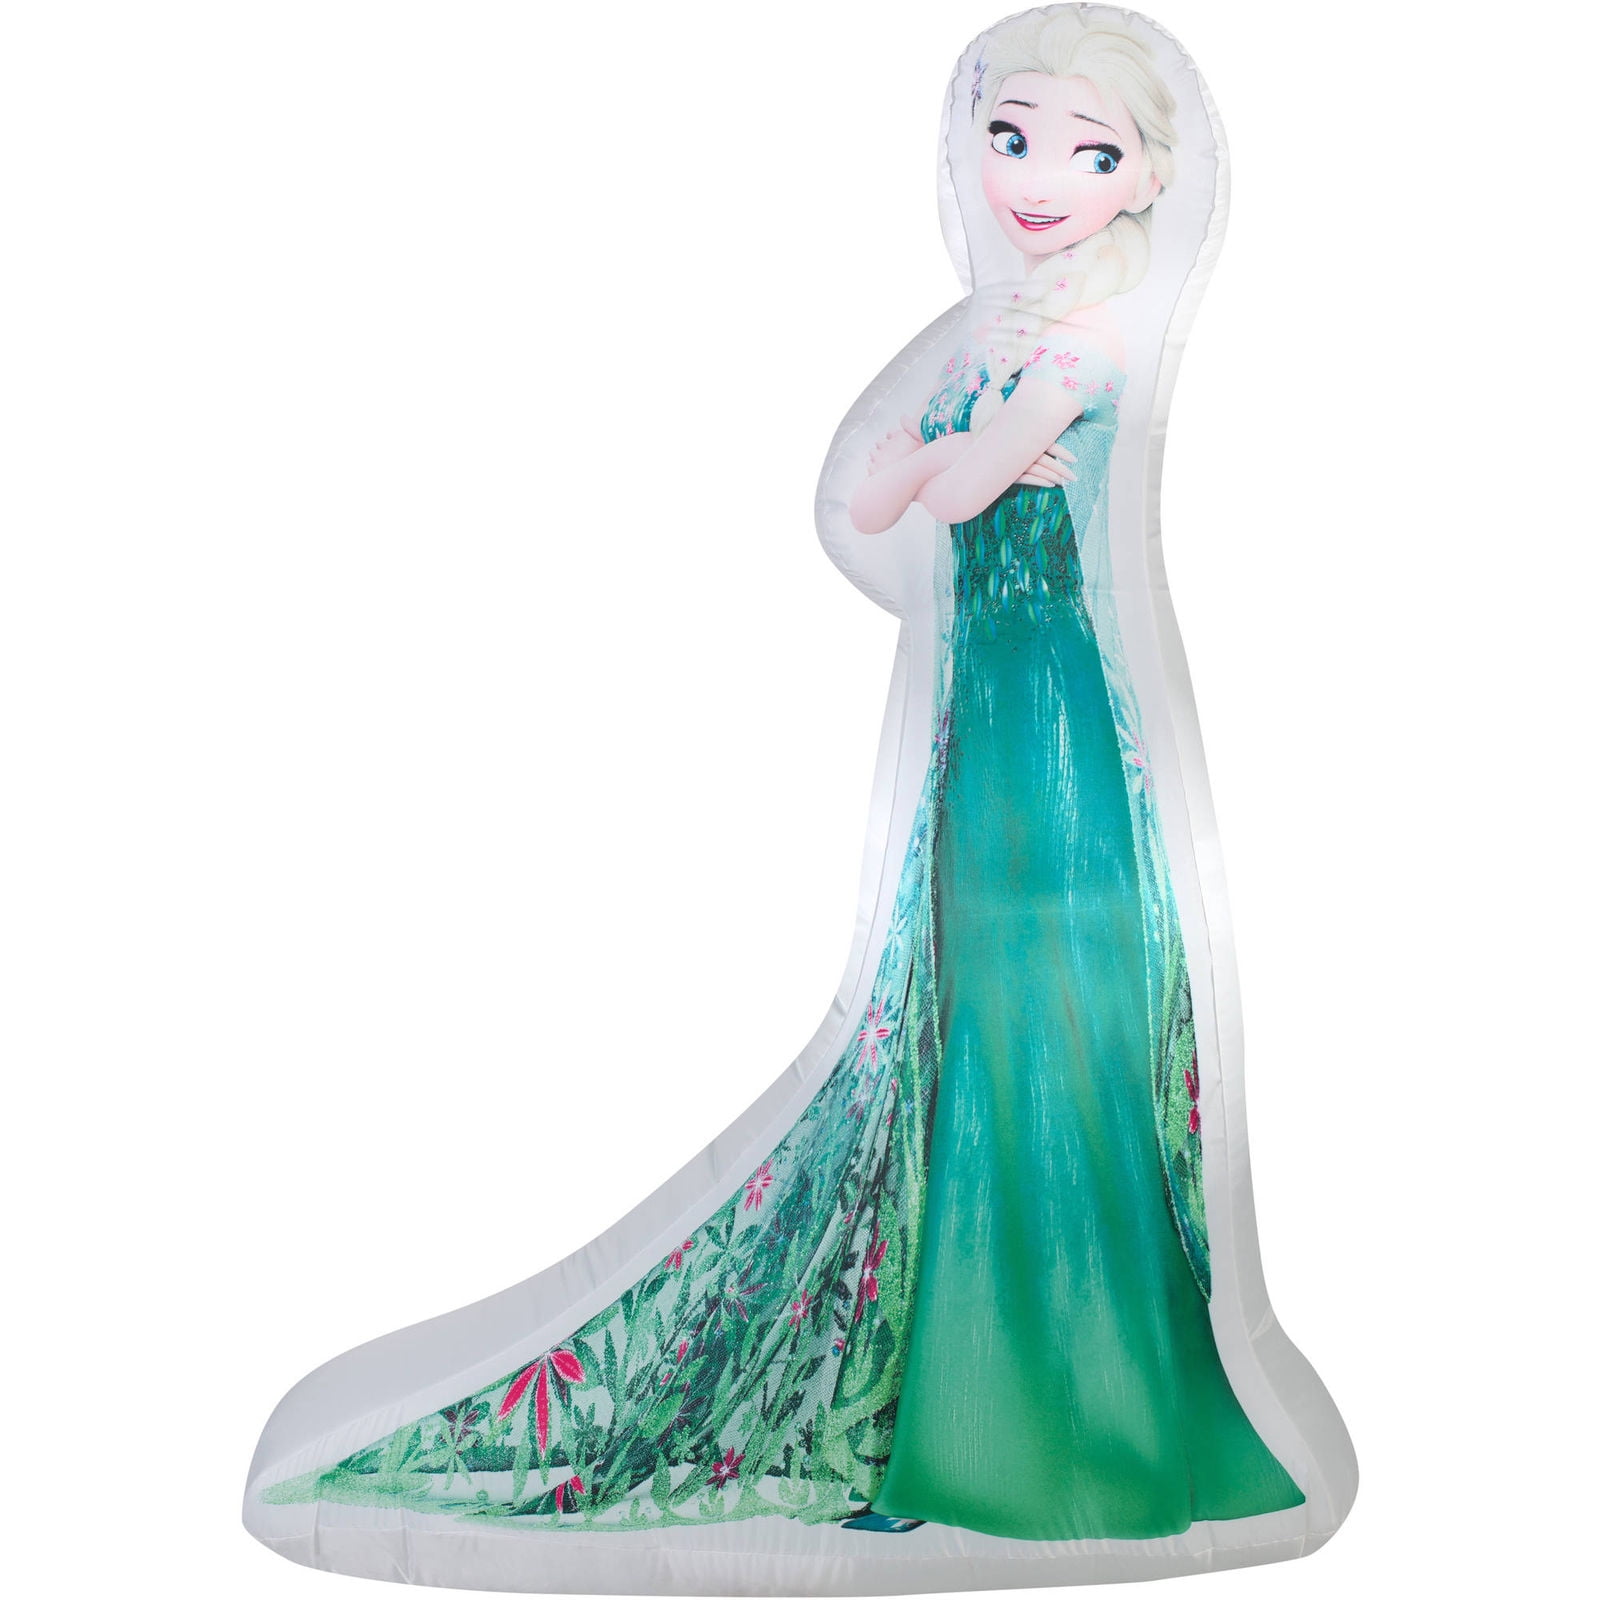 30 Best Pictures Frozen Party Decorations Walmart : Frozen stage decor | Disney frozen birthday party, Frozen ...